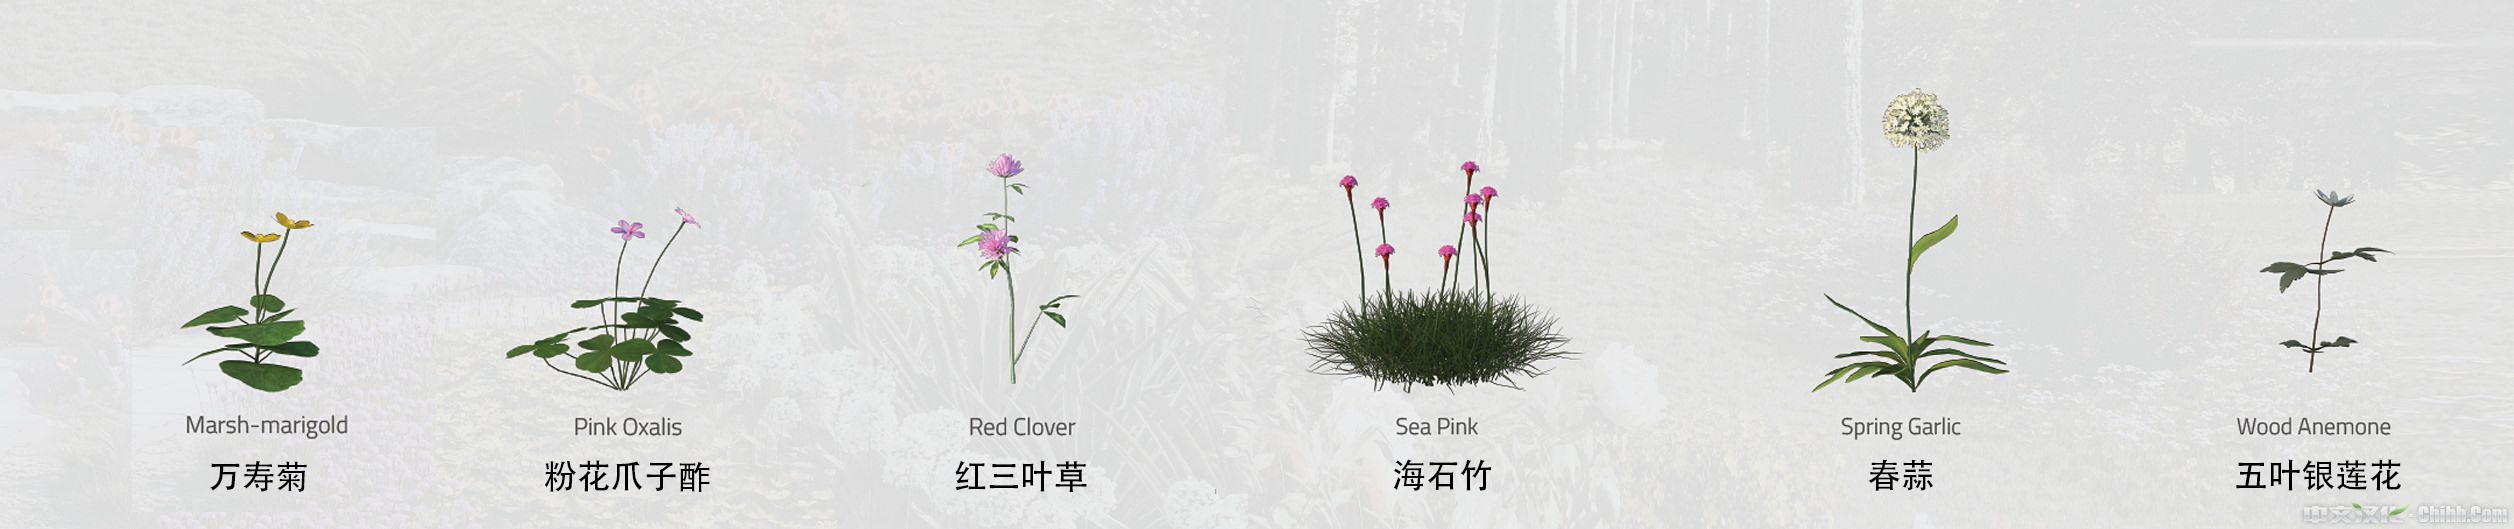 Flower_plant-04.jpg